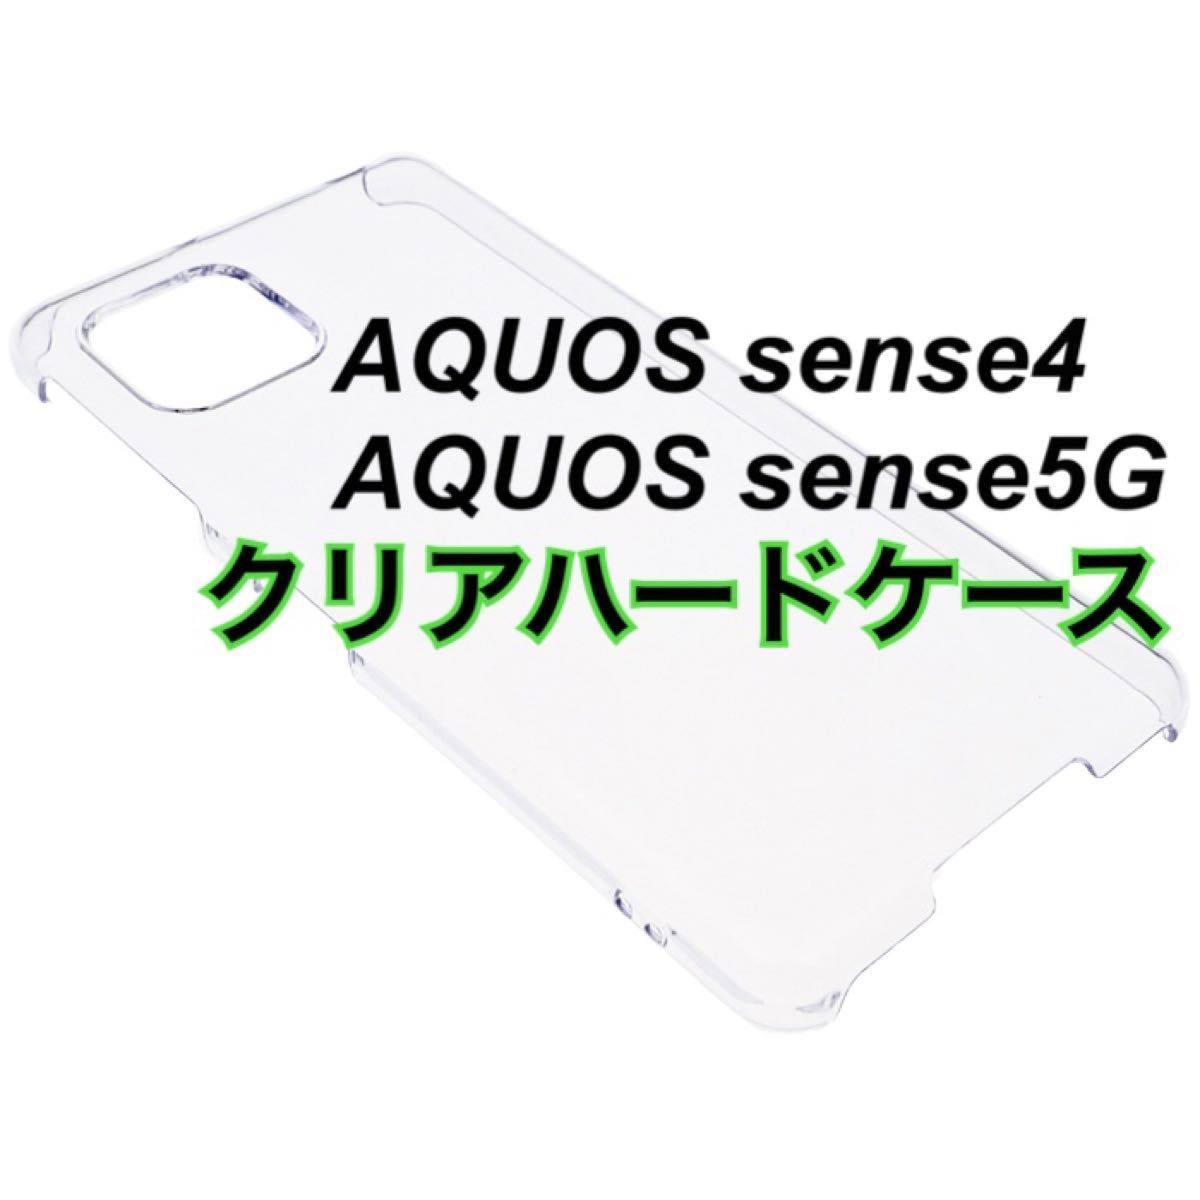 AQUOS sense4 sense5G クリアハードケース 新品未使用 透明 シンプル アクオス センス4 センス5G